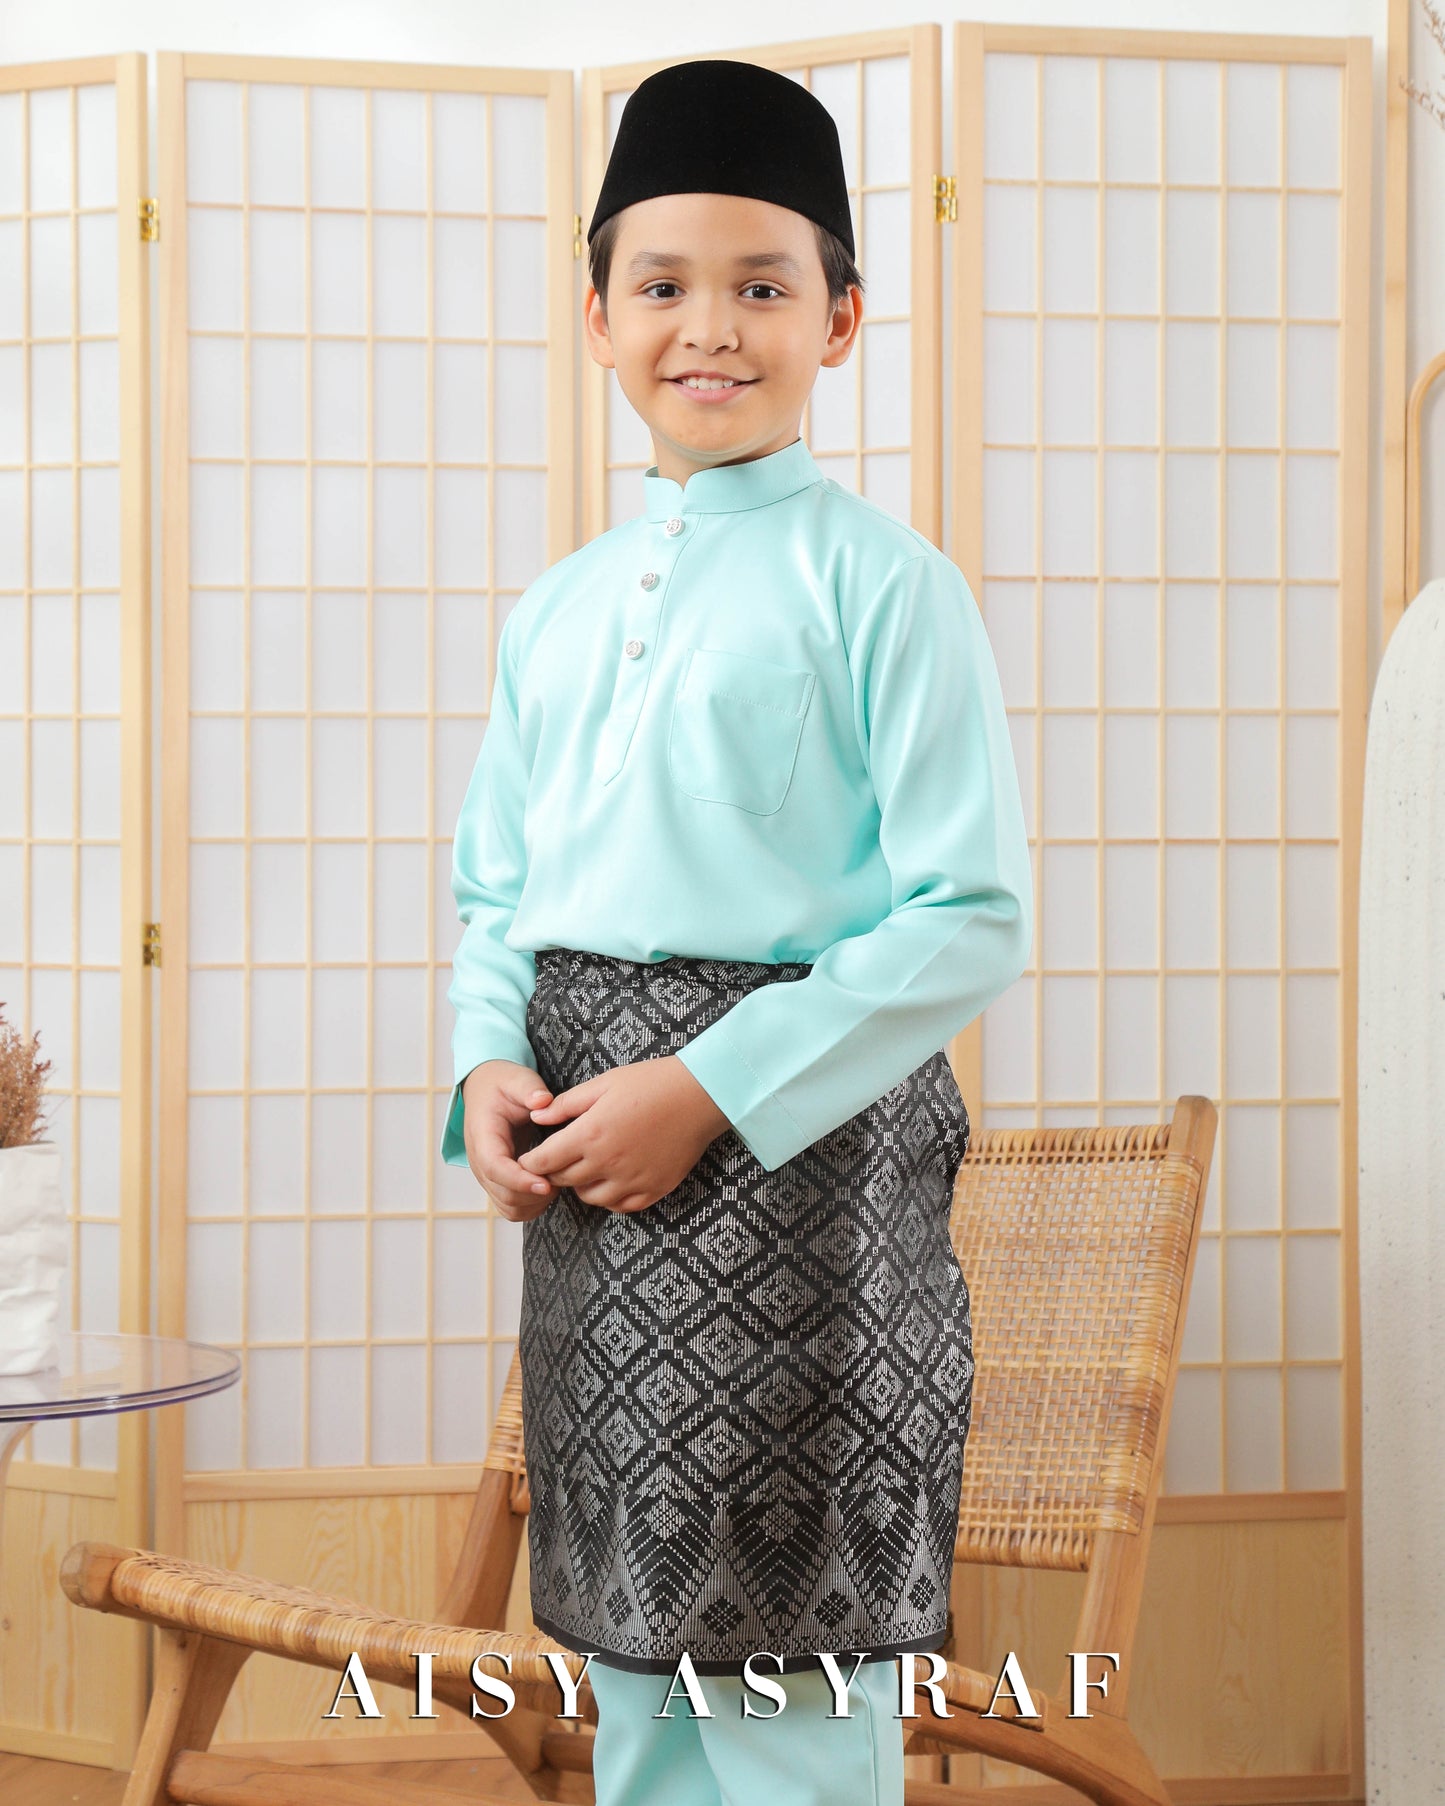 Baju Melayu Zaidan Kids - Mint Green